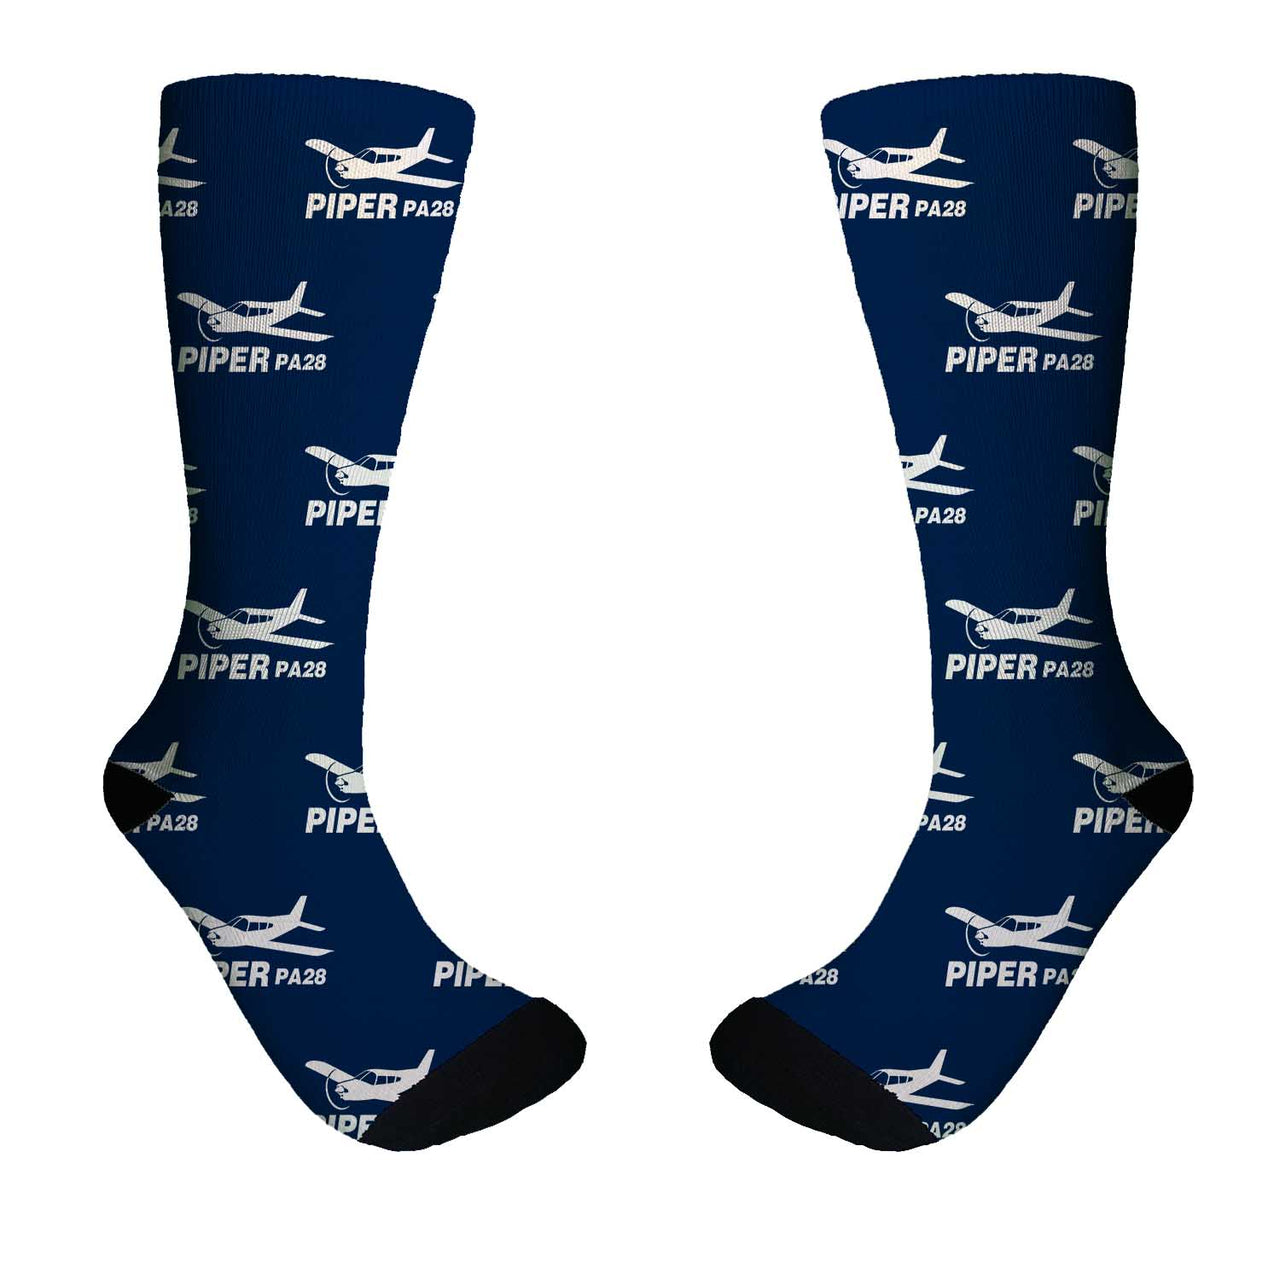 The Piper PA28 Designed Socks